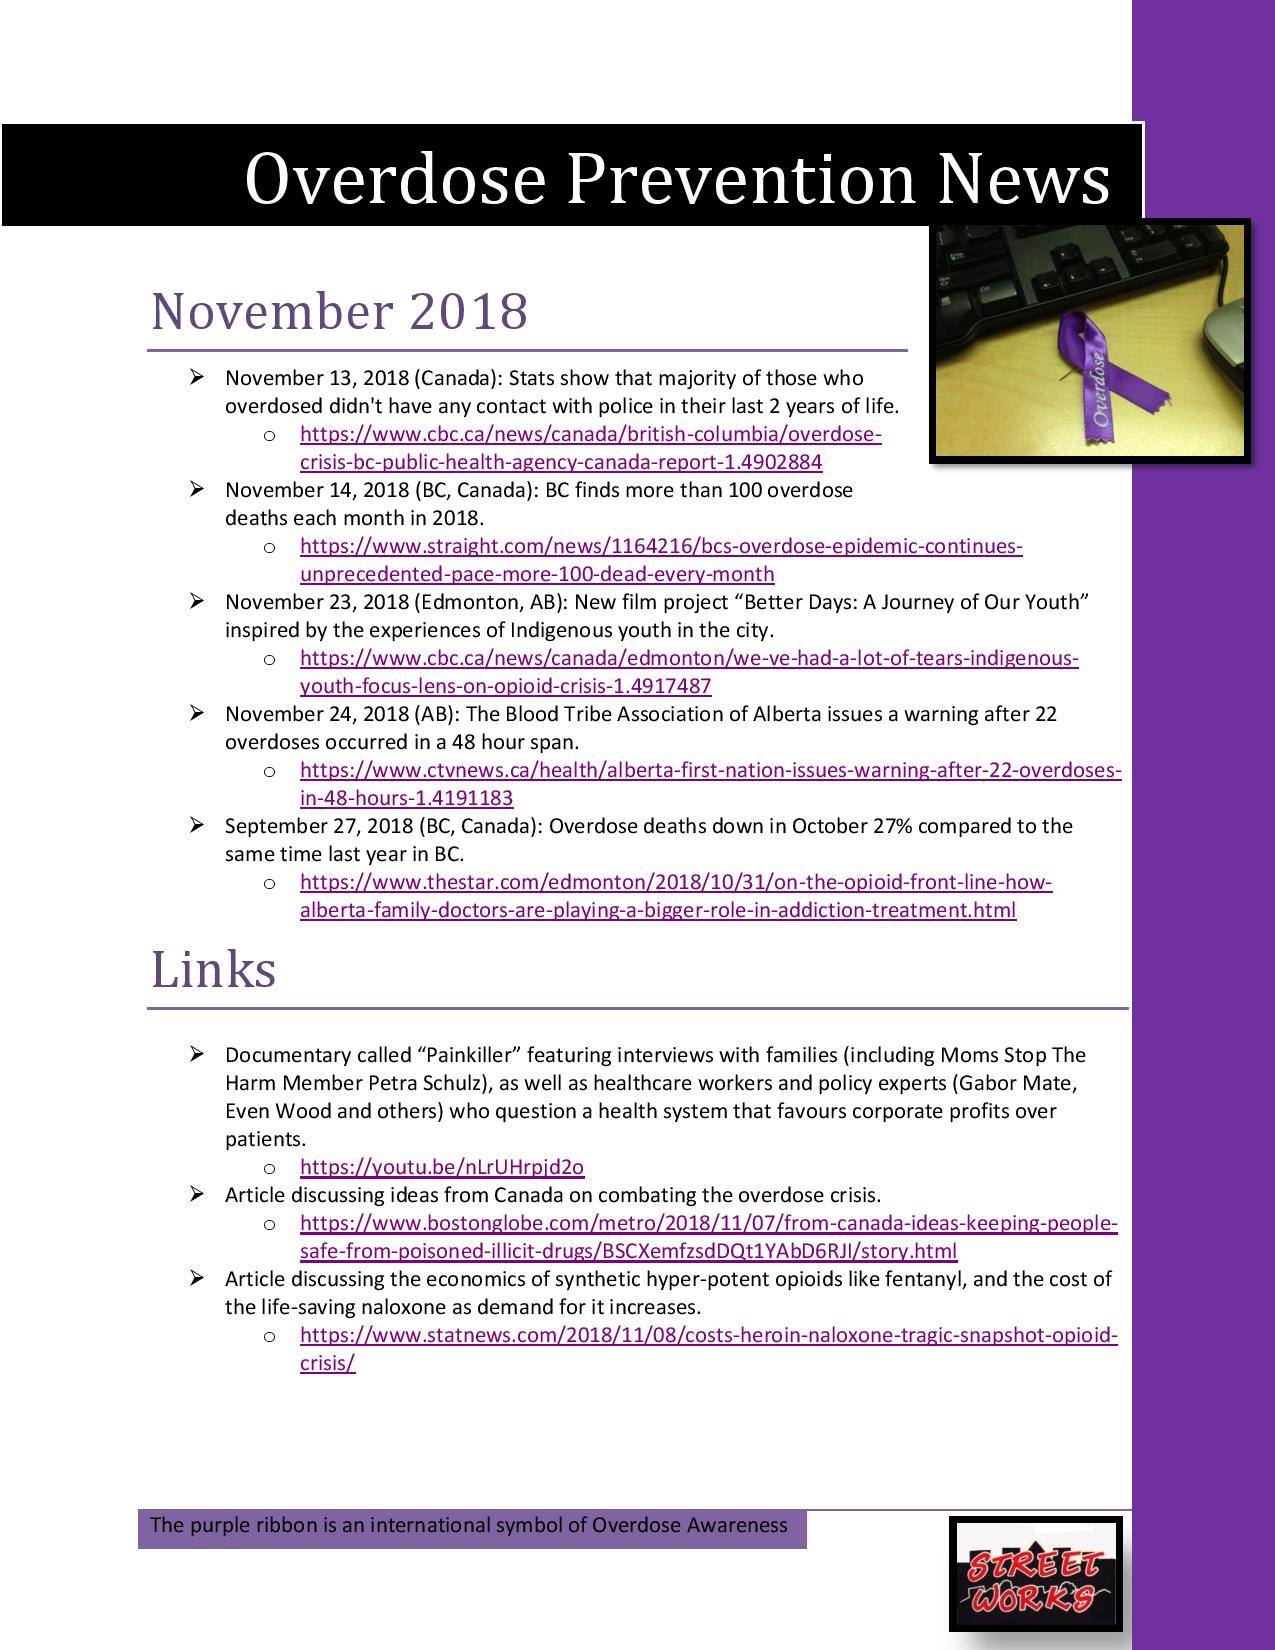 Hinton Overdose Prevention Streetworks News 2018